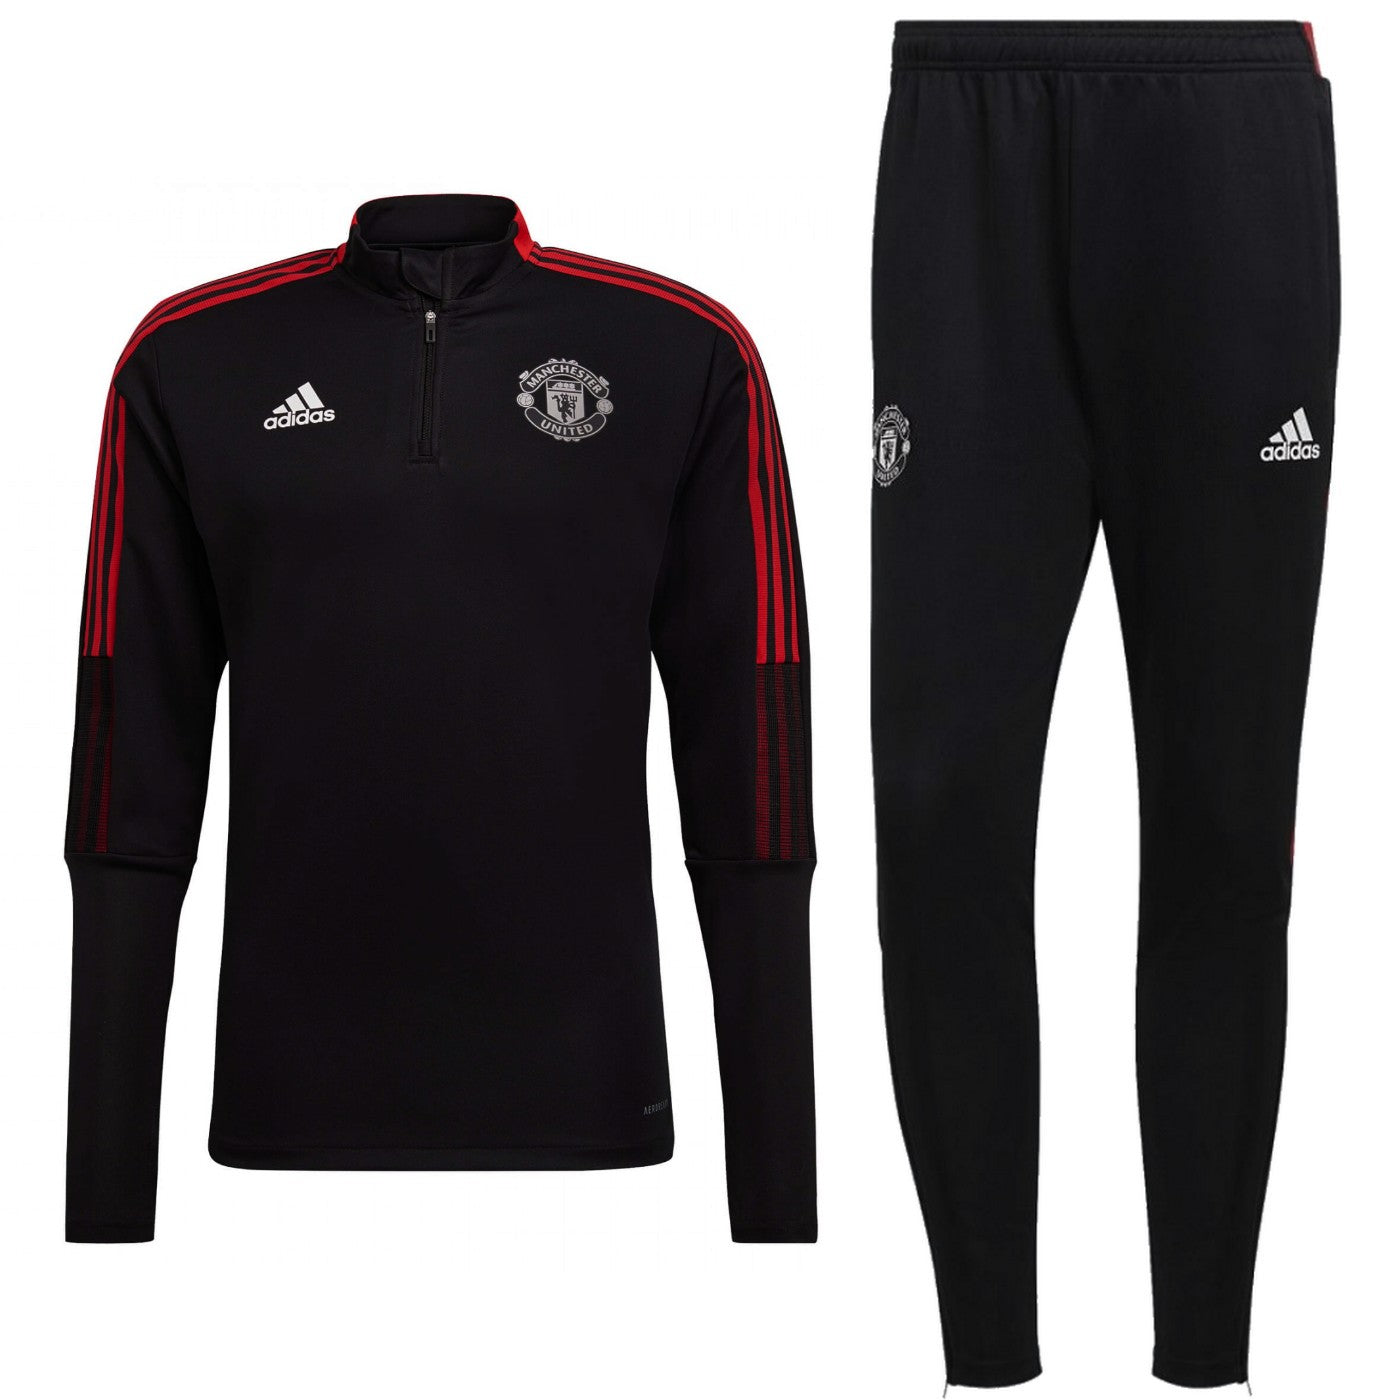 Manchester United Black Training Technical Tracksuit 2021/22 - Adidas Men's Large / Men's Medium